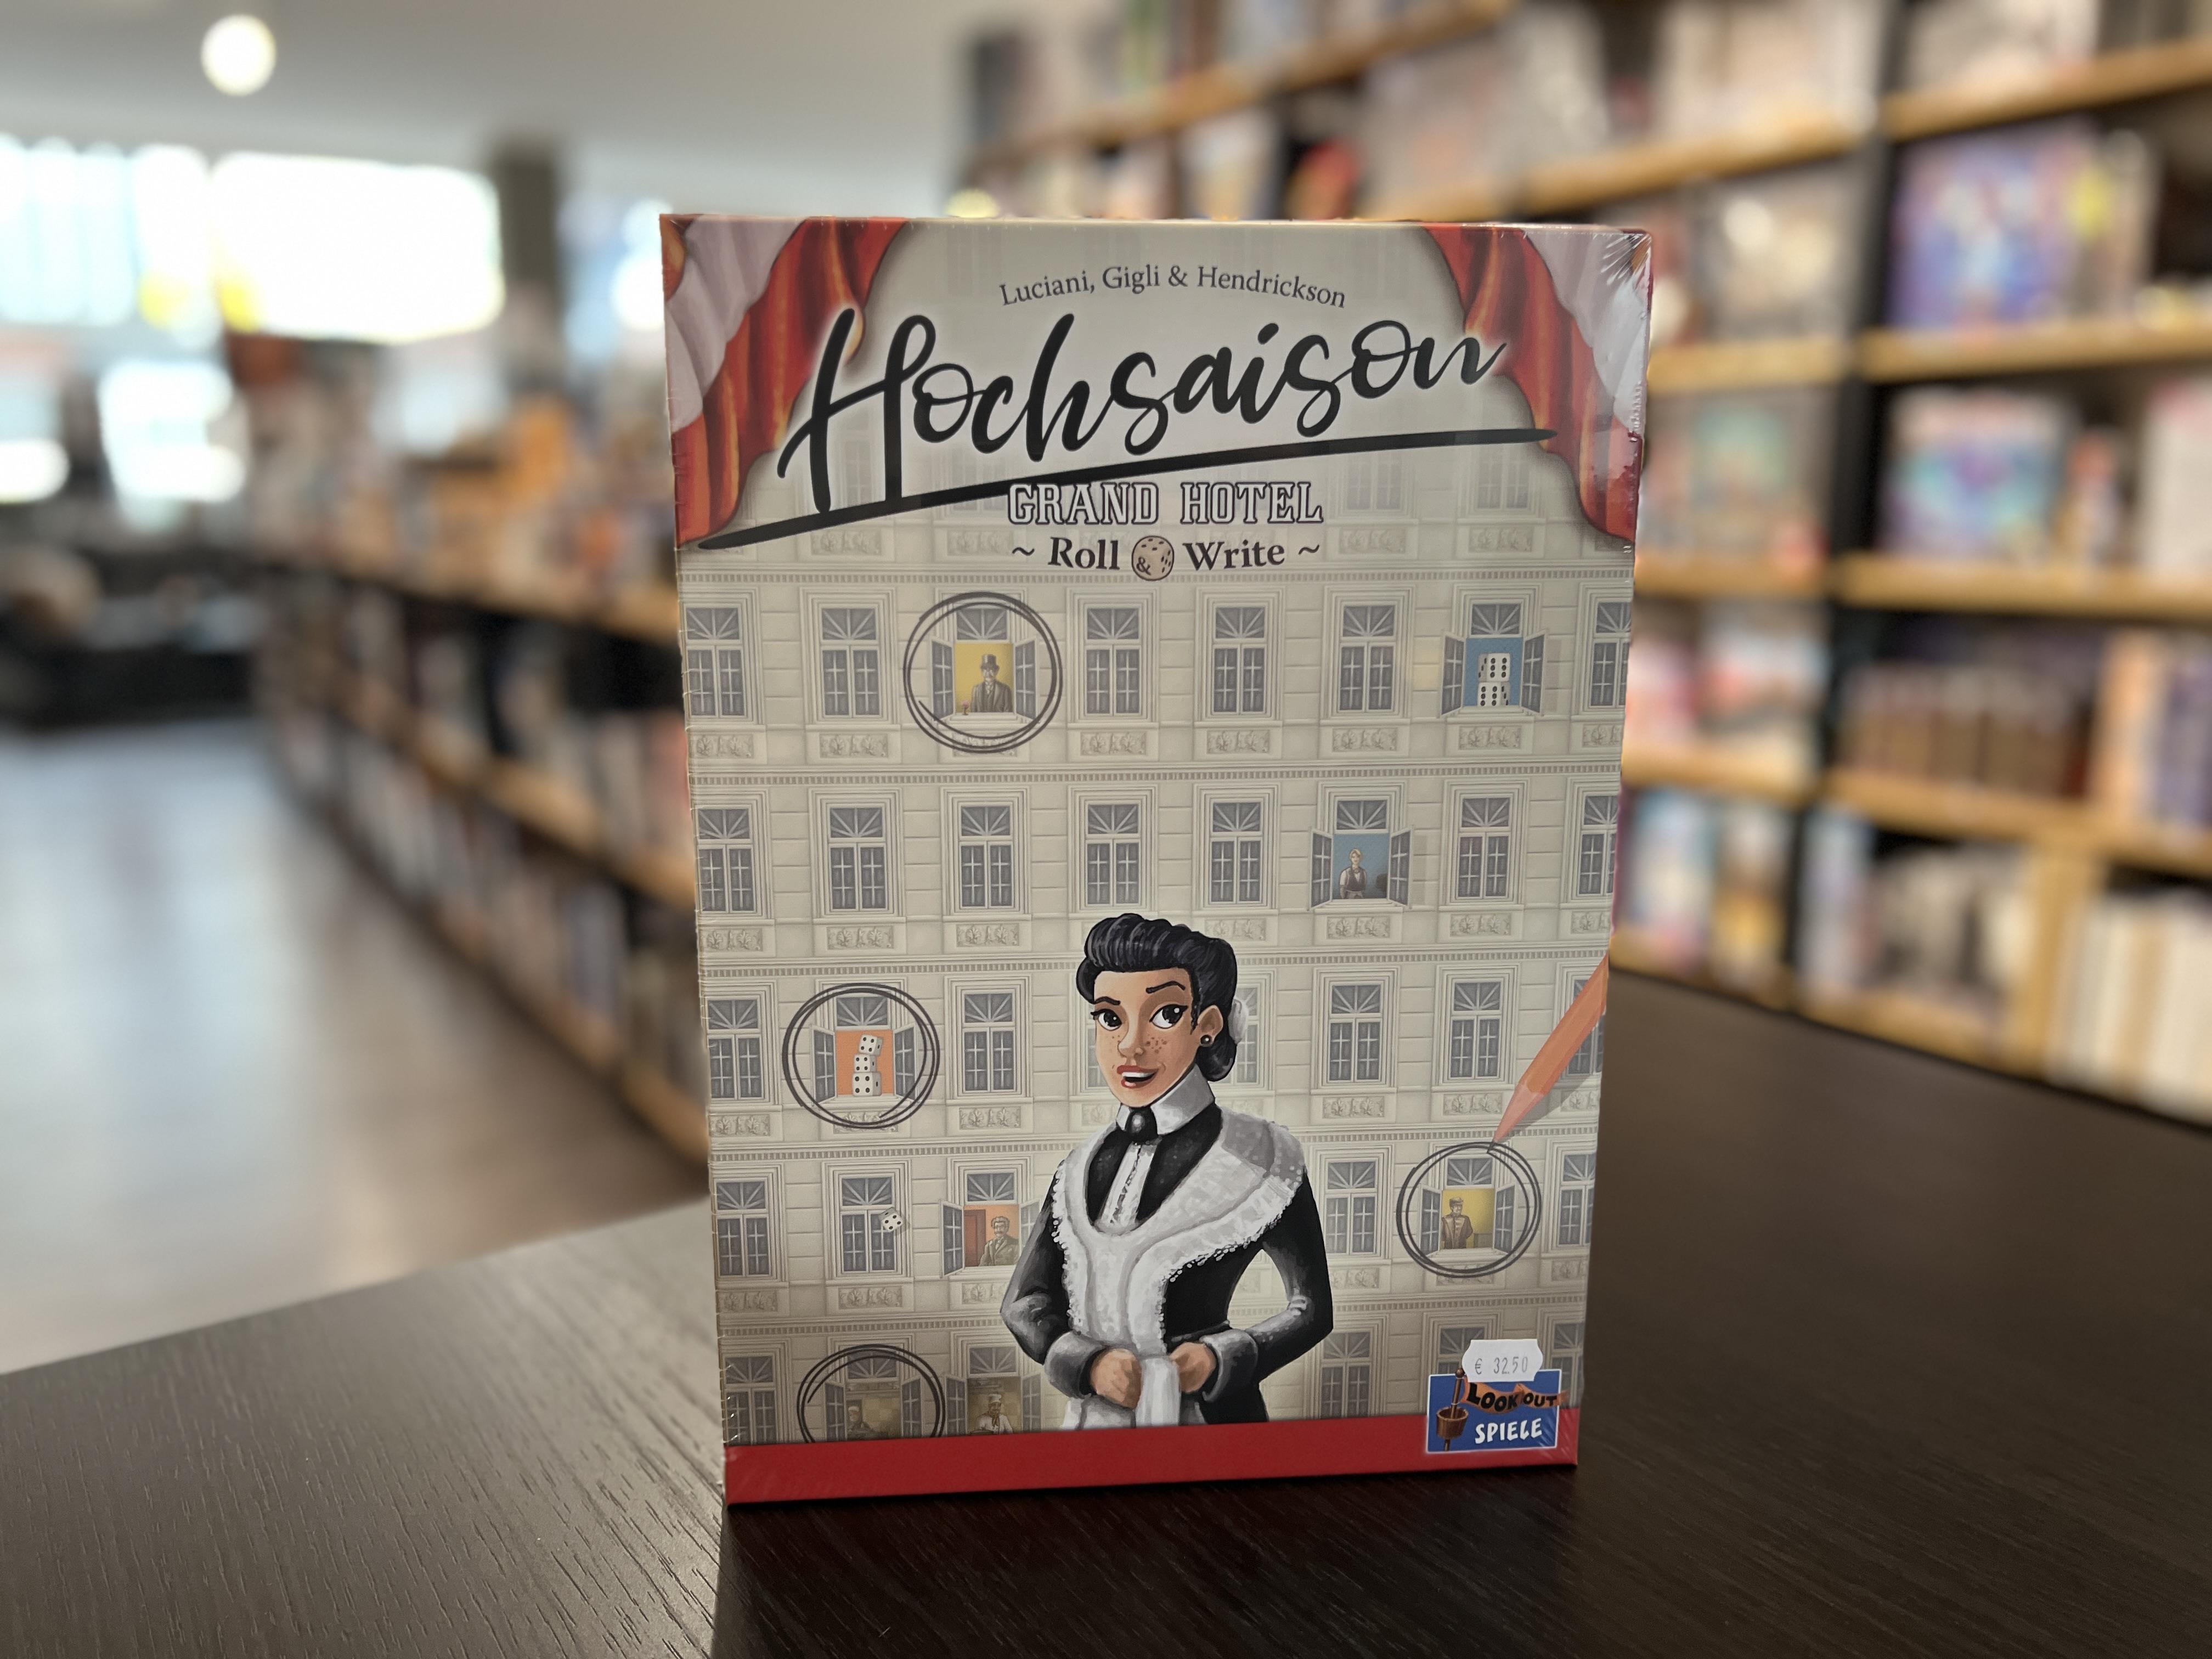 Hochsaison: Grand Hotel Roll& Write